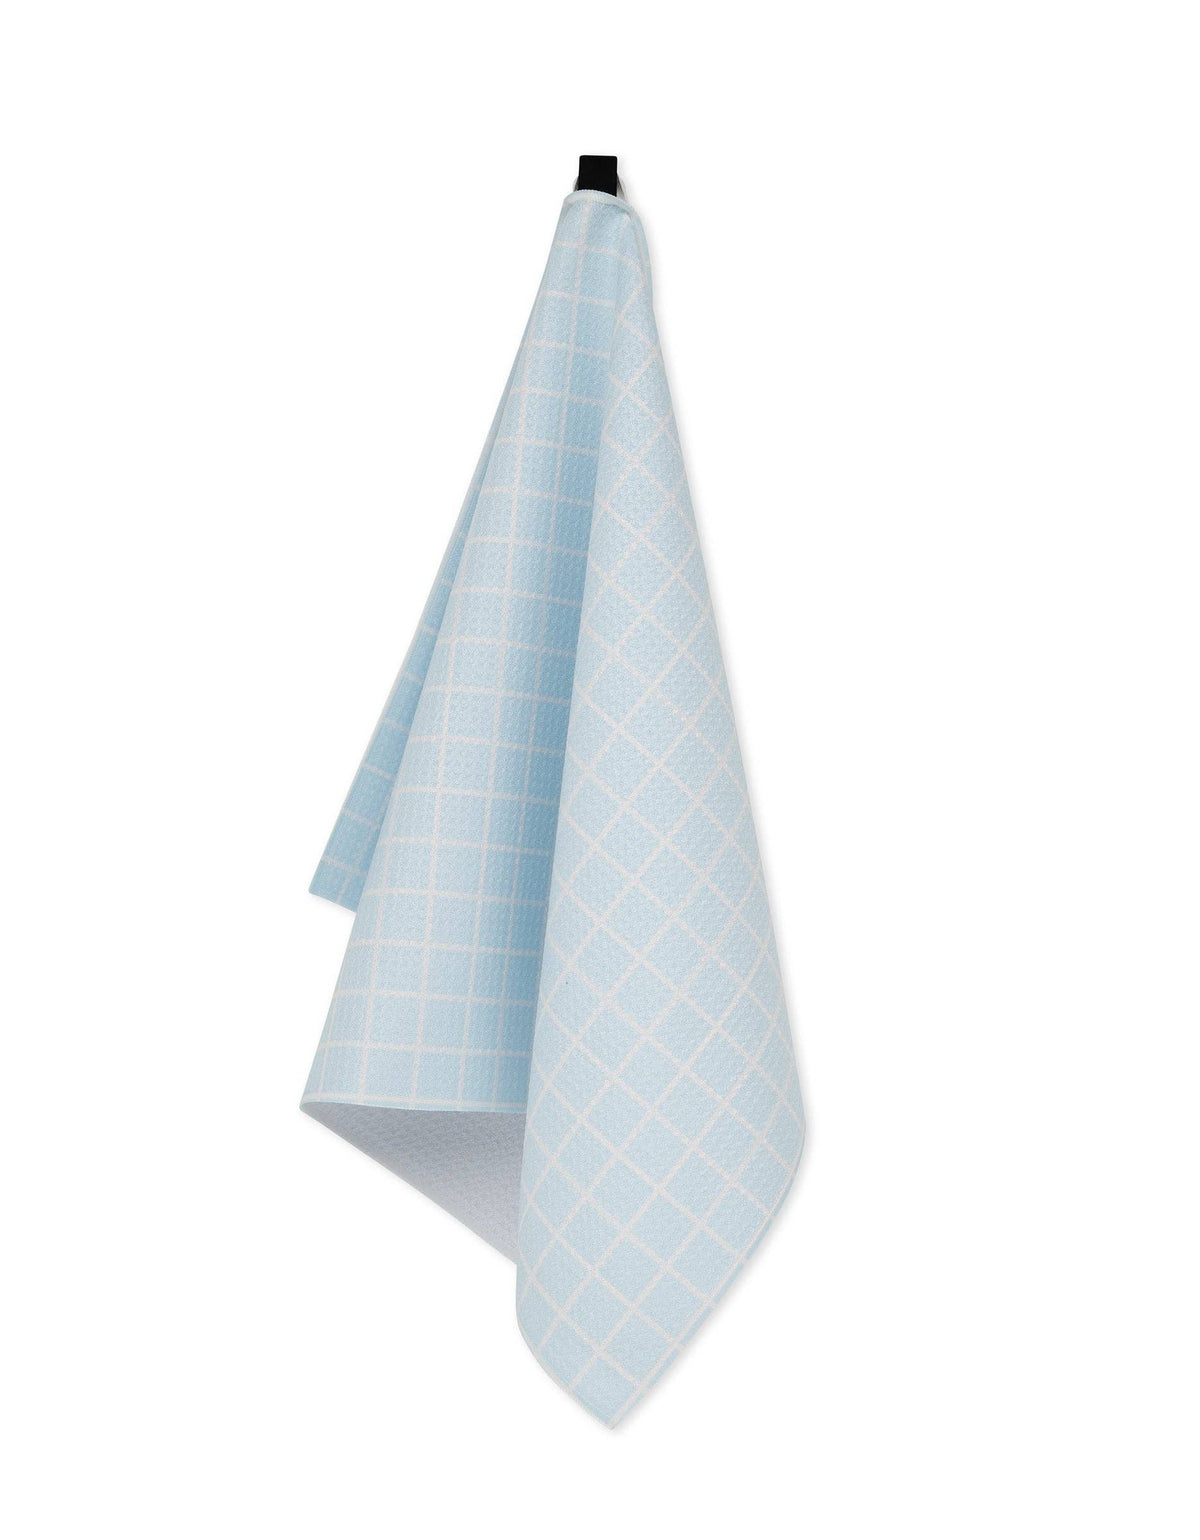 Grid Blue Geometry Kitchen Towel - The Preppy Bunny